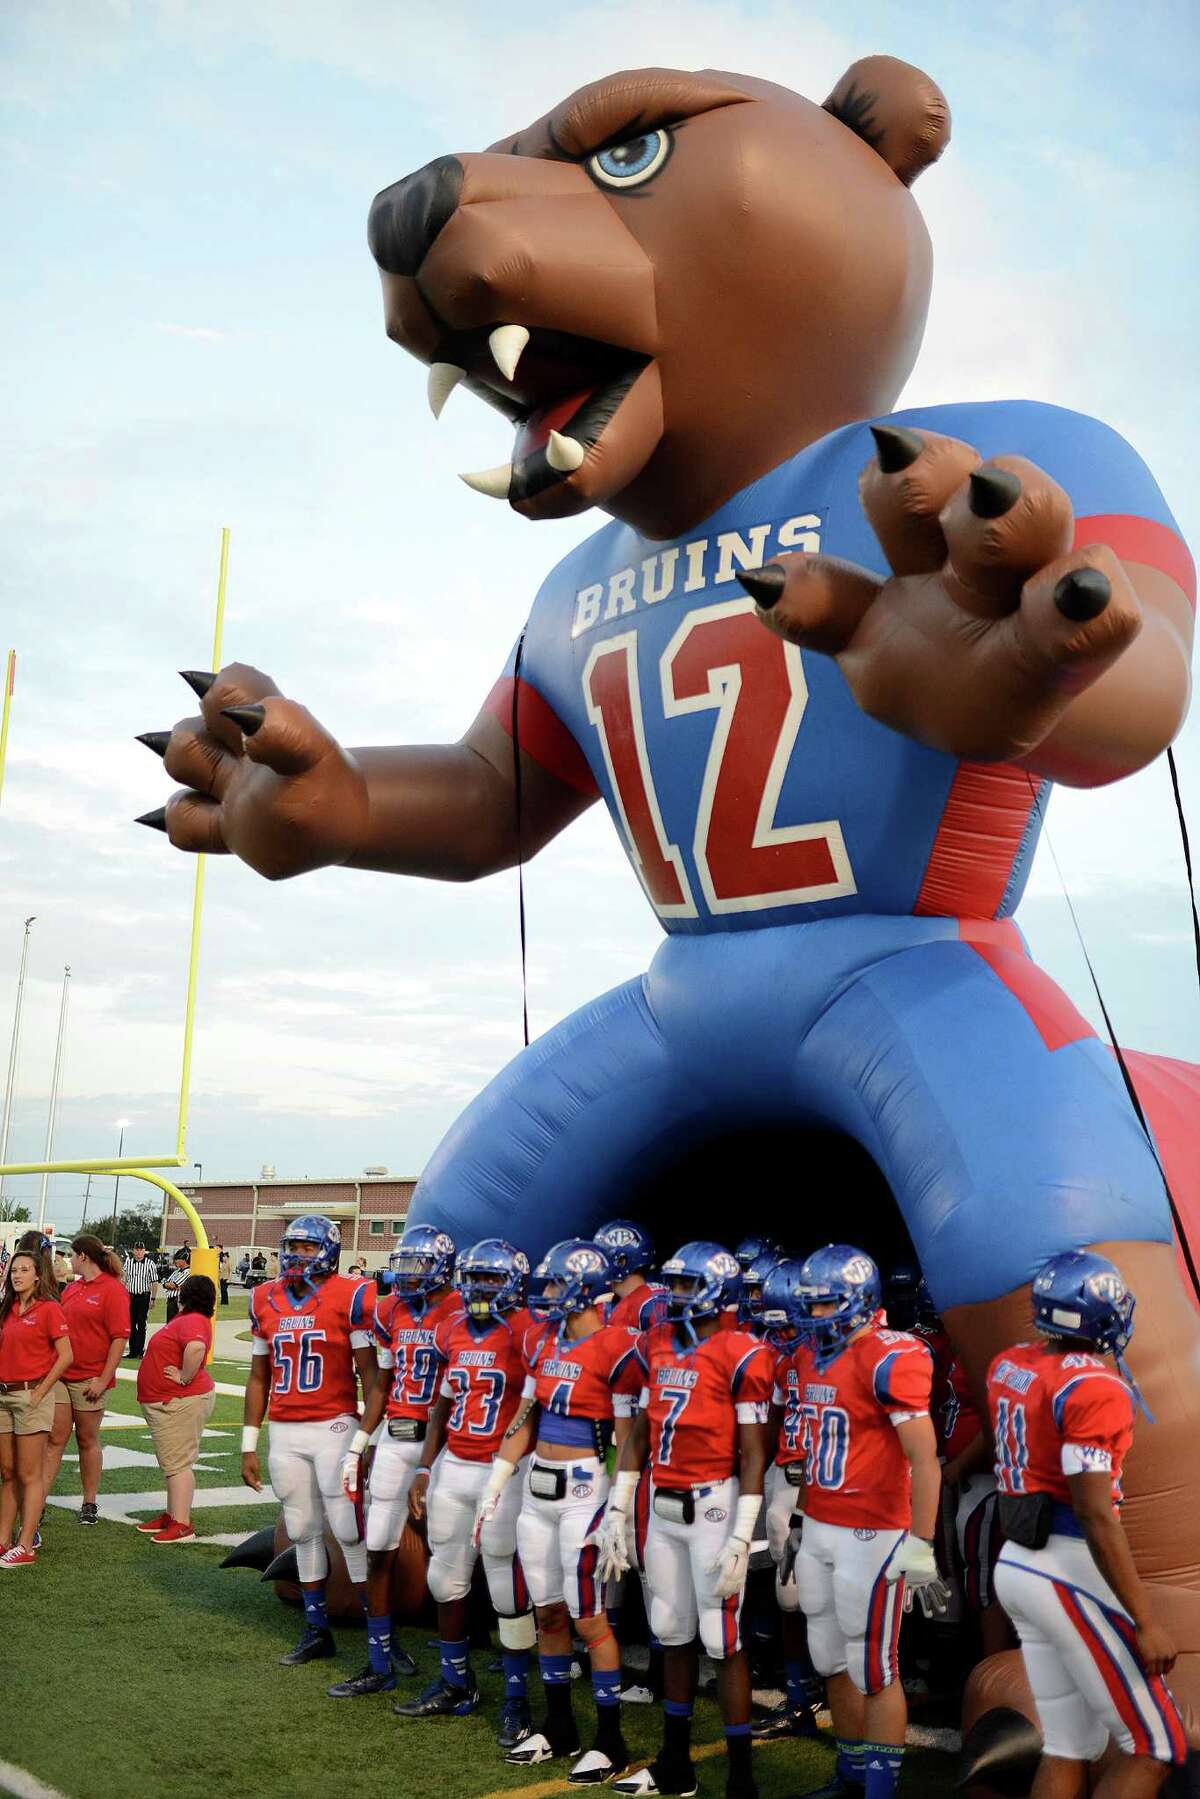 San Antonio-area high school mascots